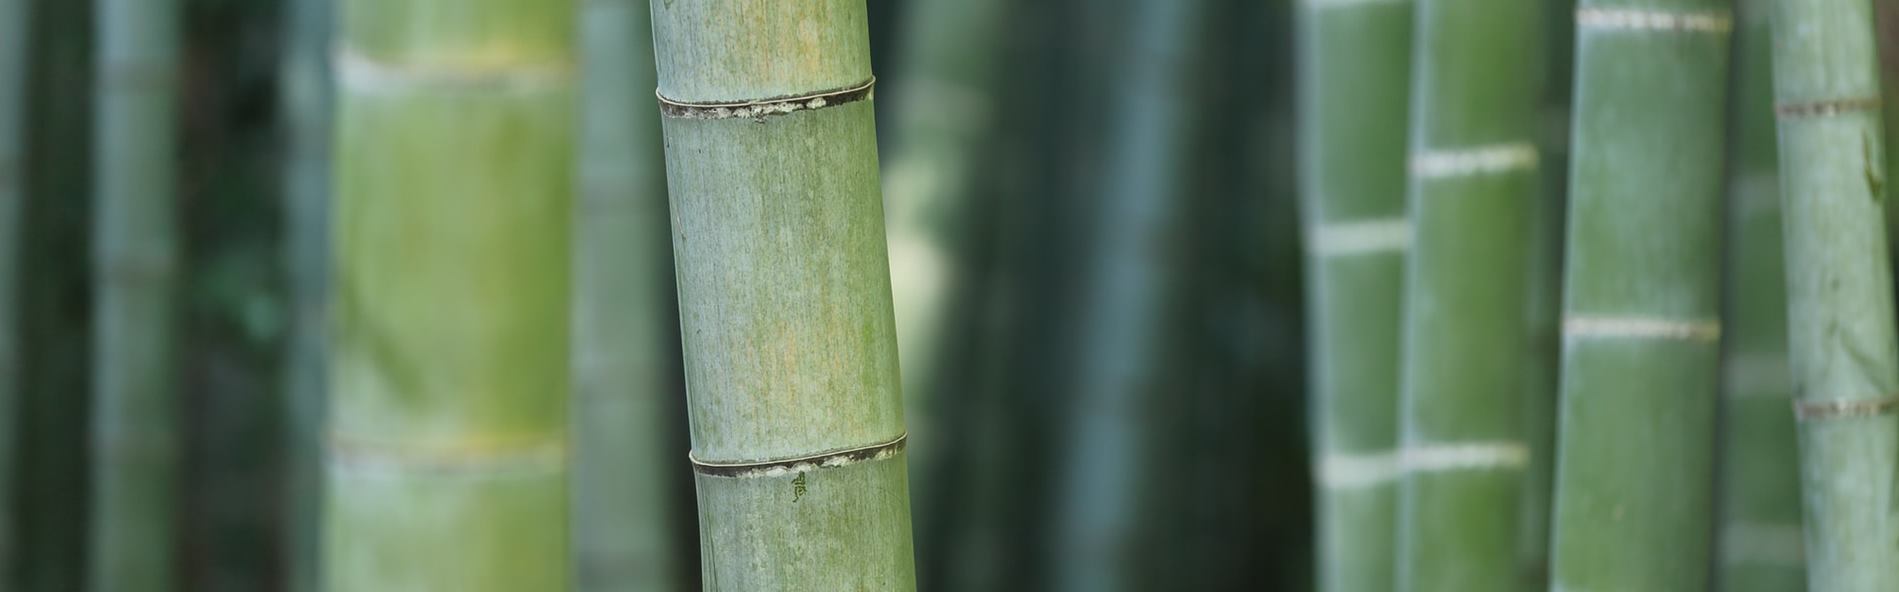 bamboo-4.jpg